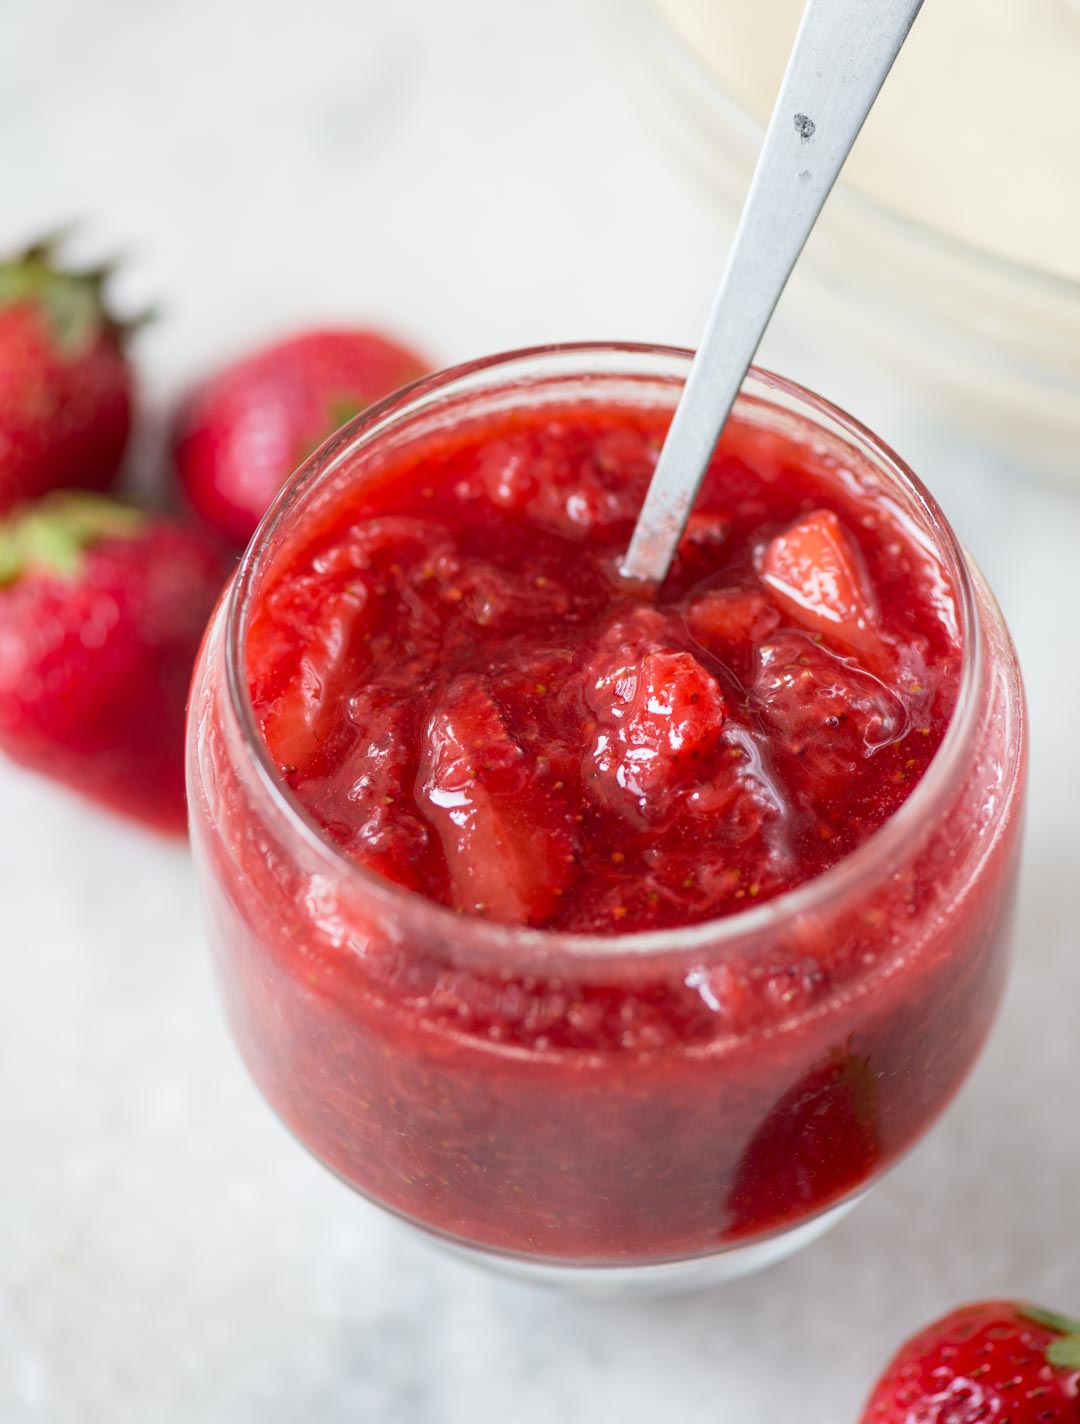 Jar of homemade strawberry sauce